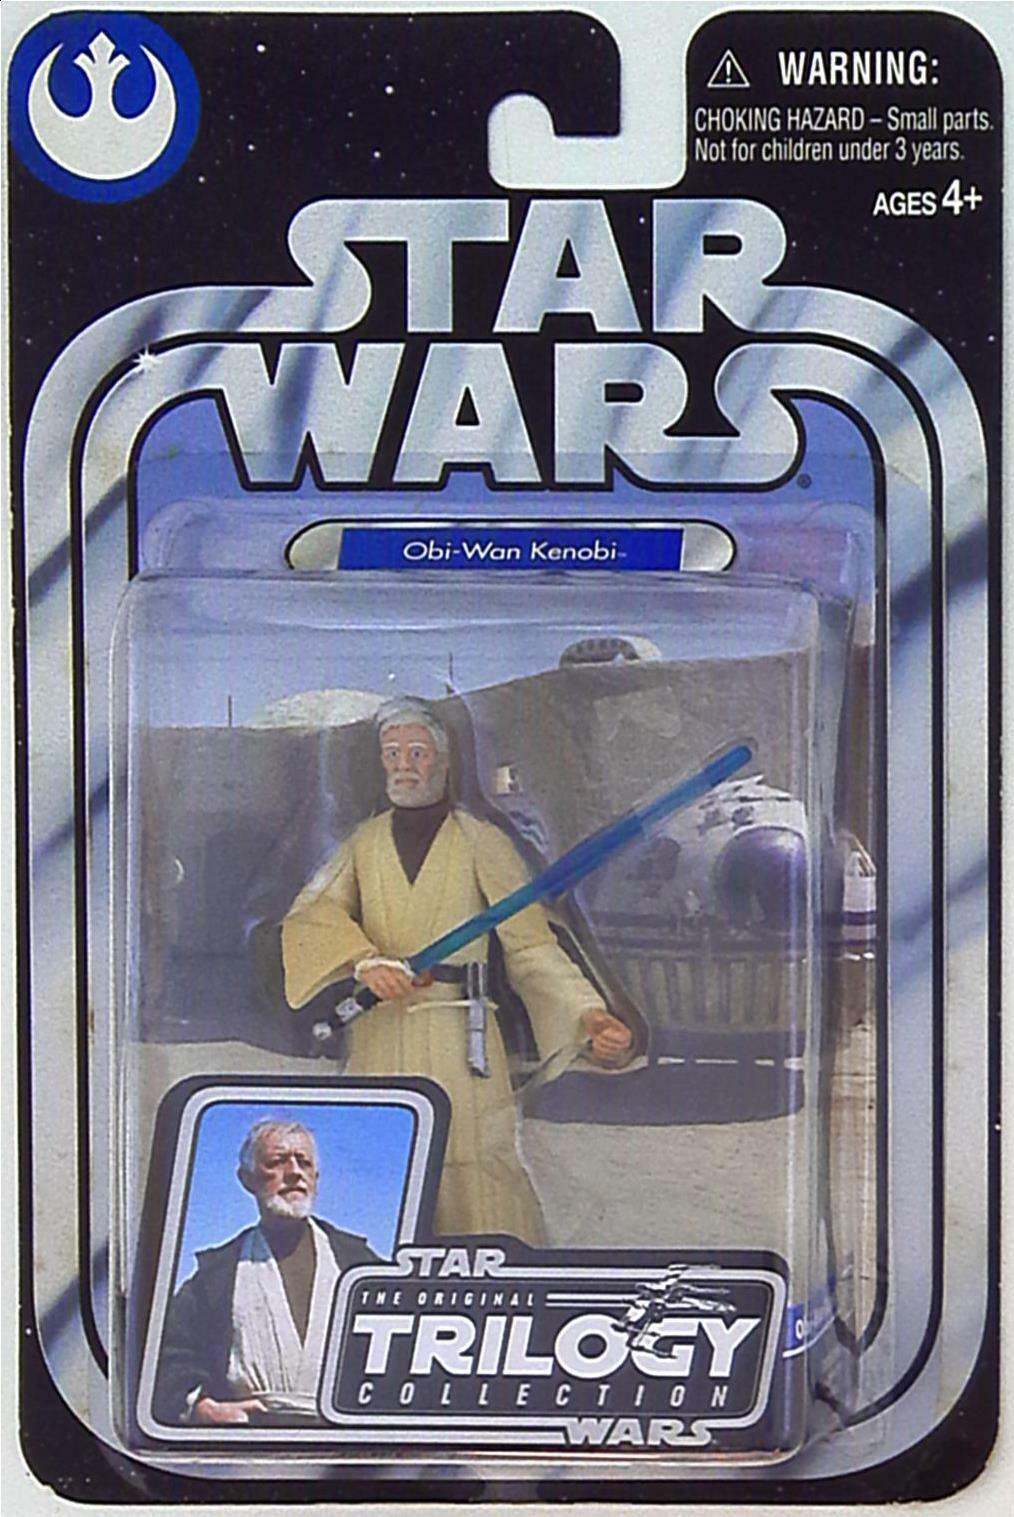 Star Wars Original Trilogy Collection (2004) Obi-Wan Kenobi Action Figure B8